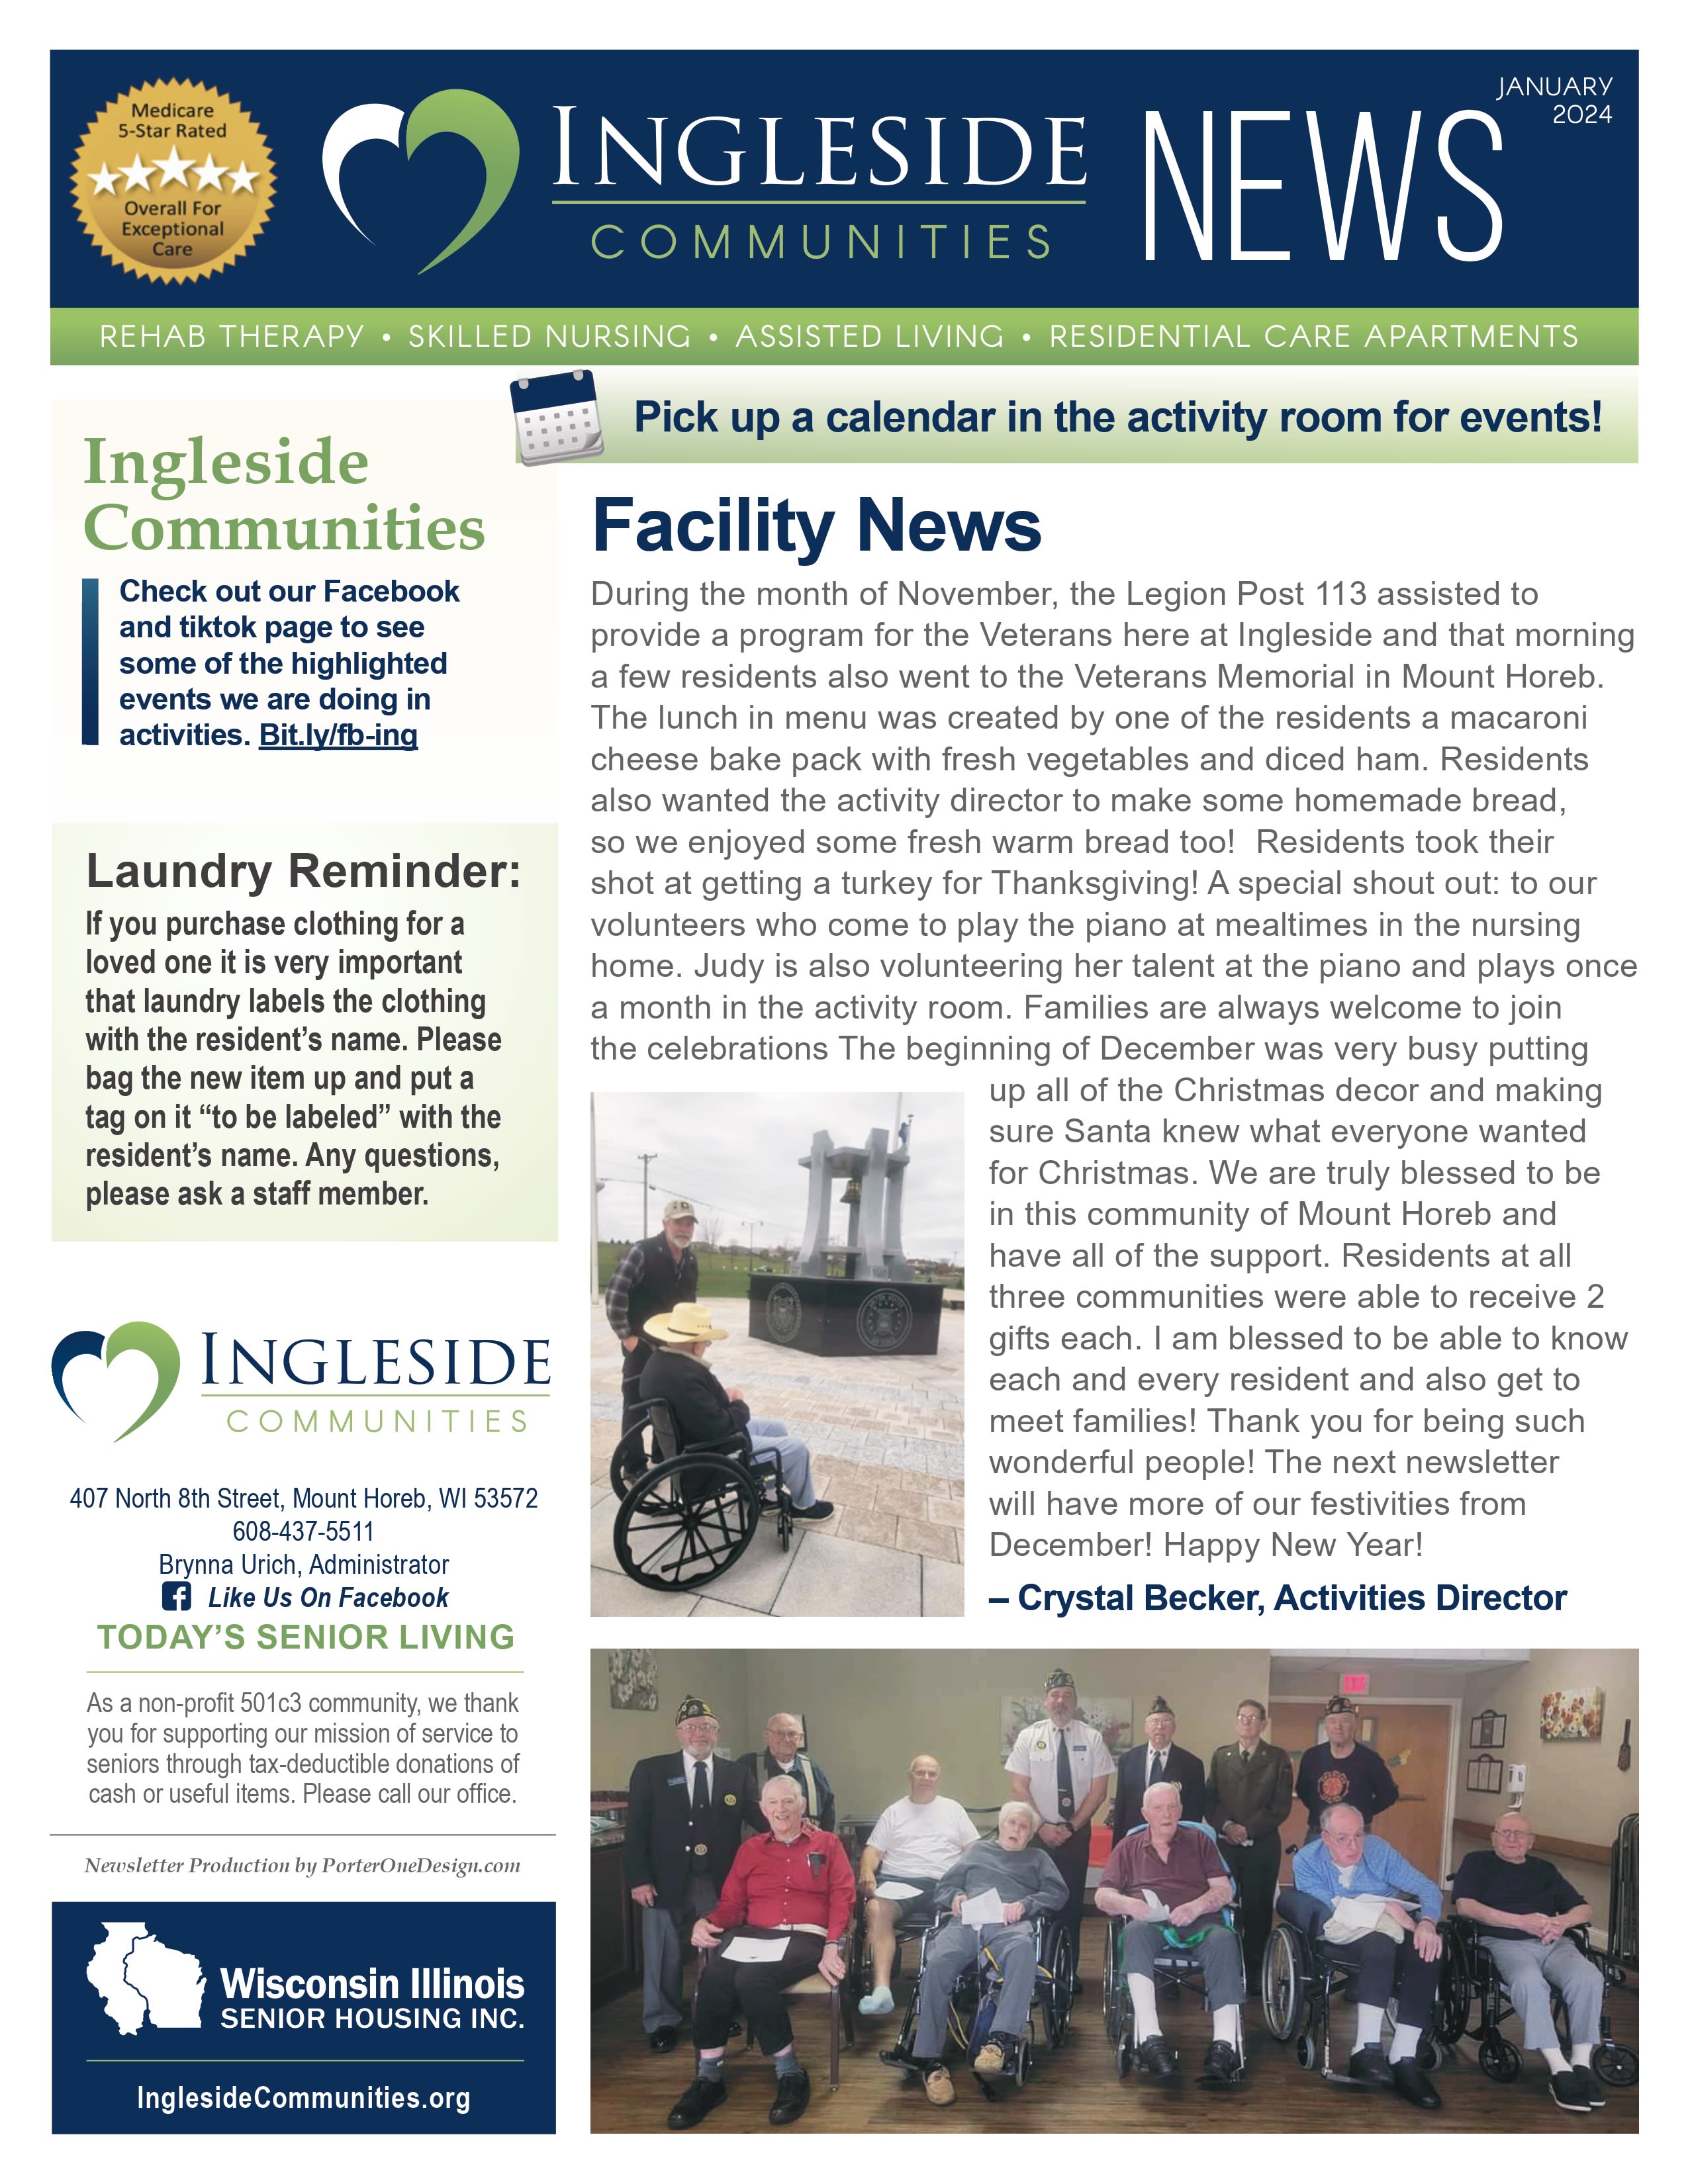 January 2024 Newsletter at Ingleside Communities in Mount Horeb, Wisconsin